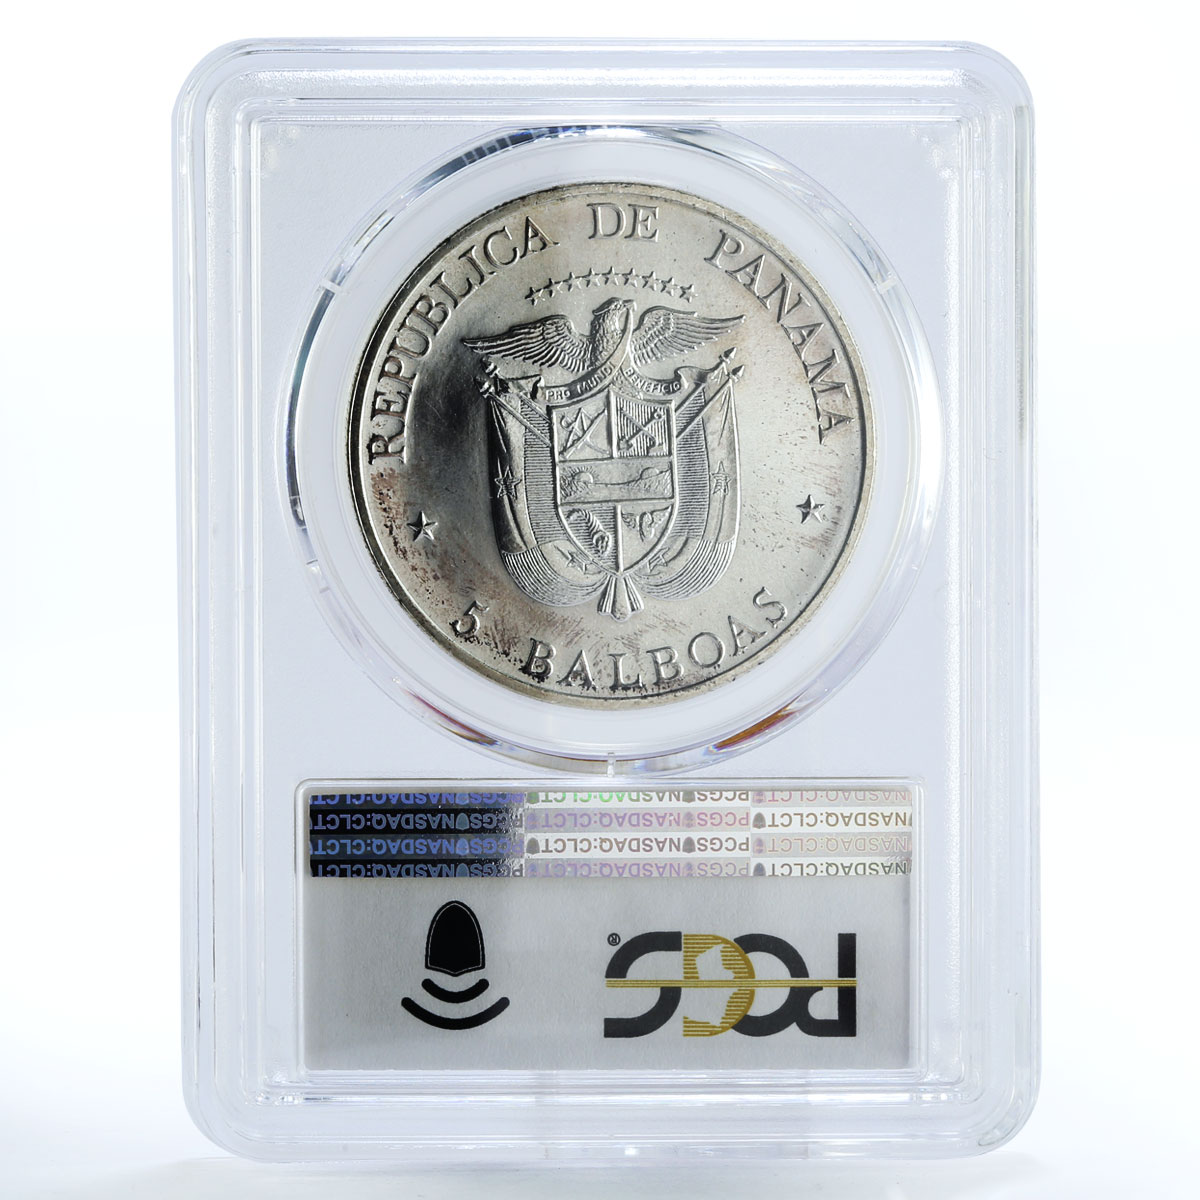 Panama 5 balboas FAO Hand Holding Crops MS67 PCGS silver coin 1972